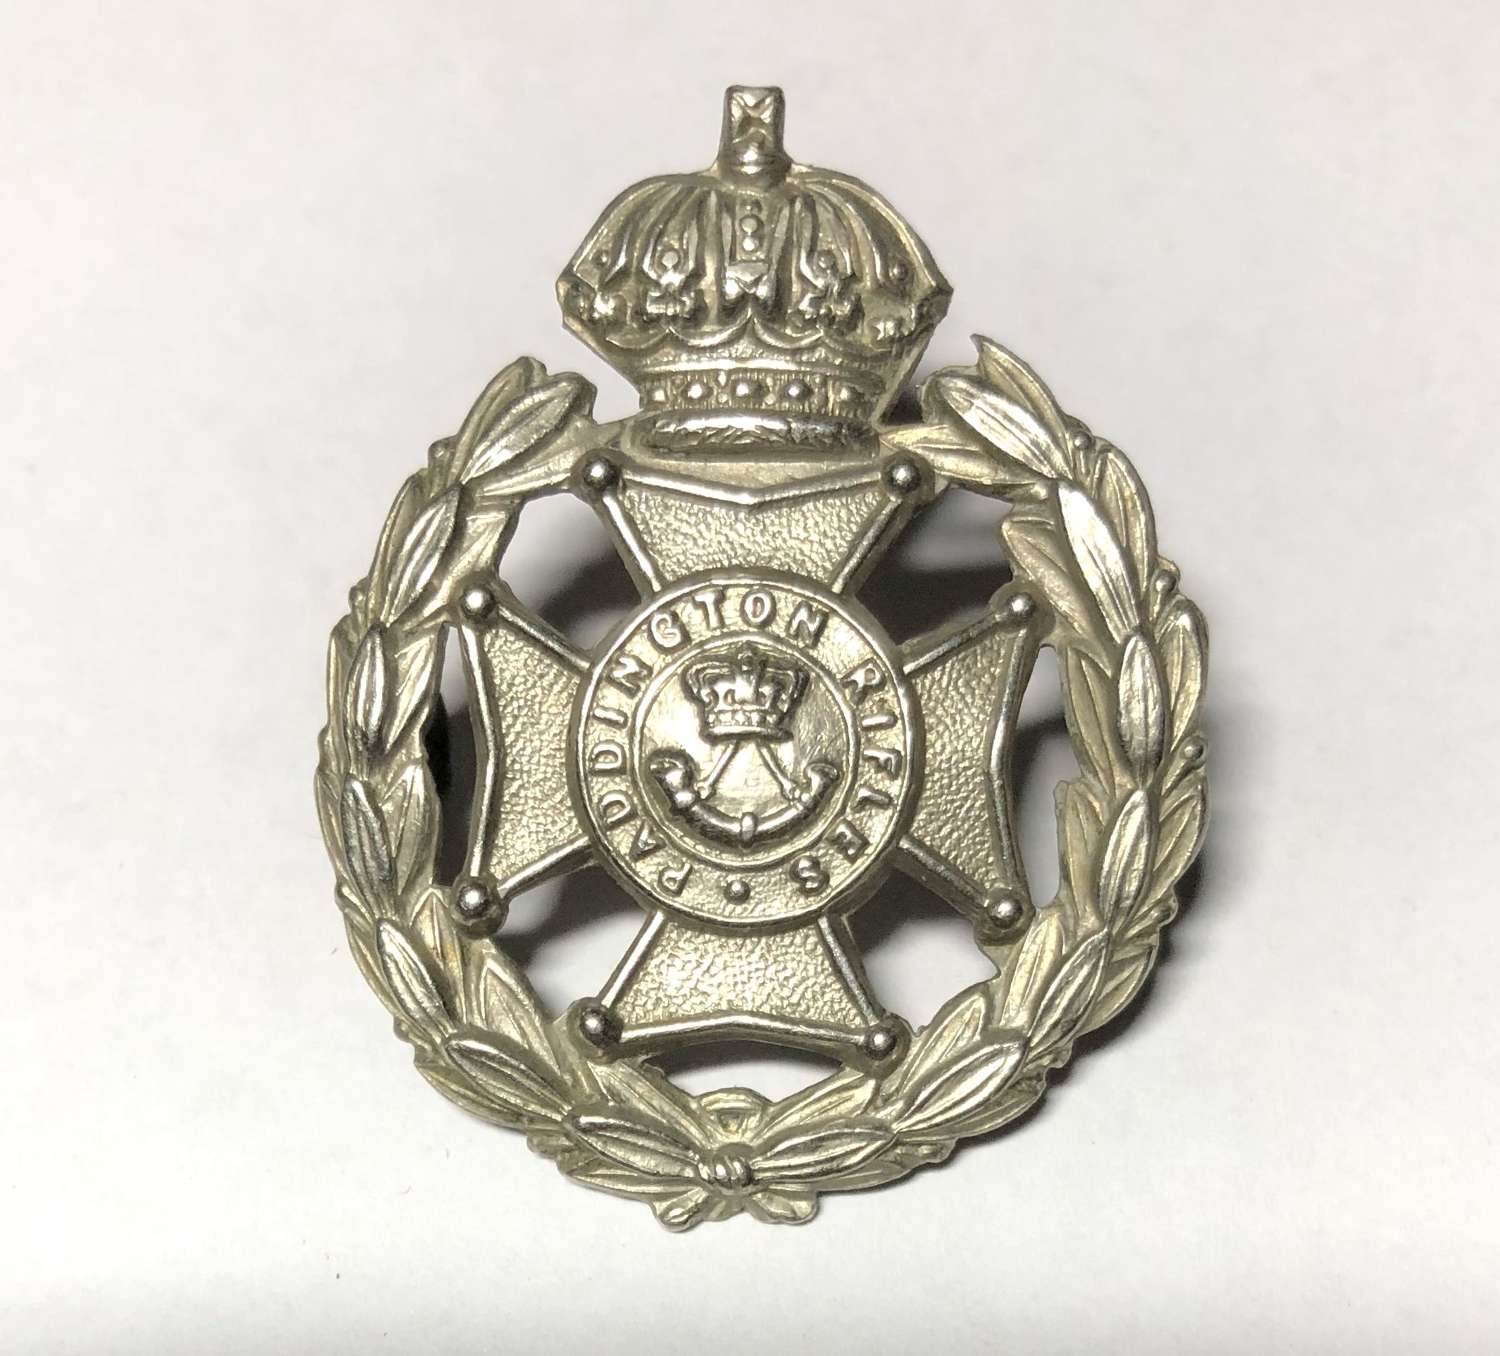 Paddington Rifles Victorian Field Service cap badge